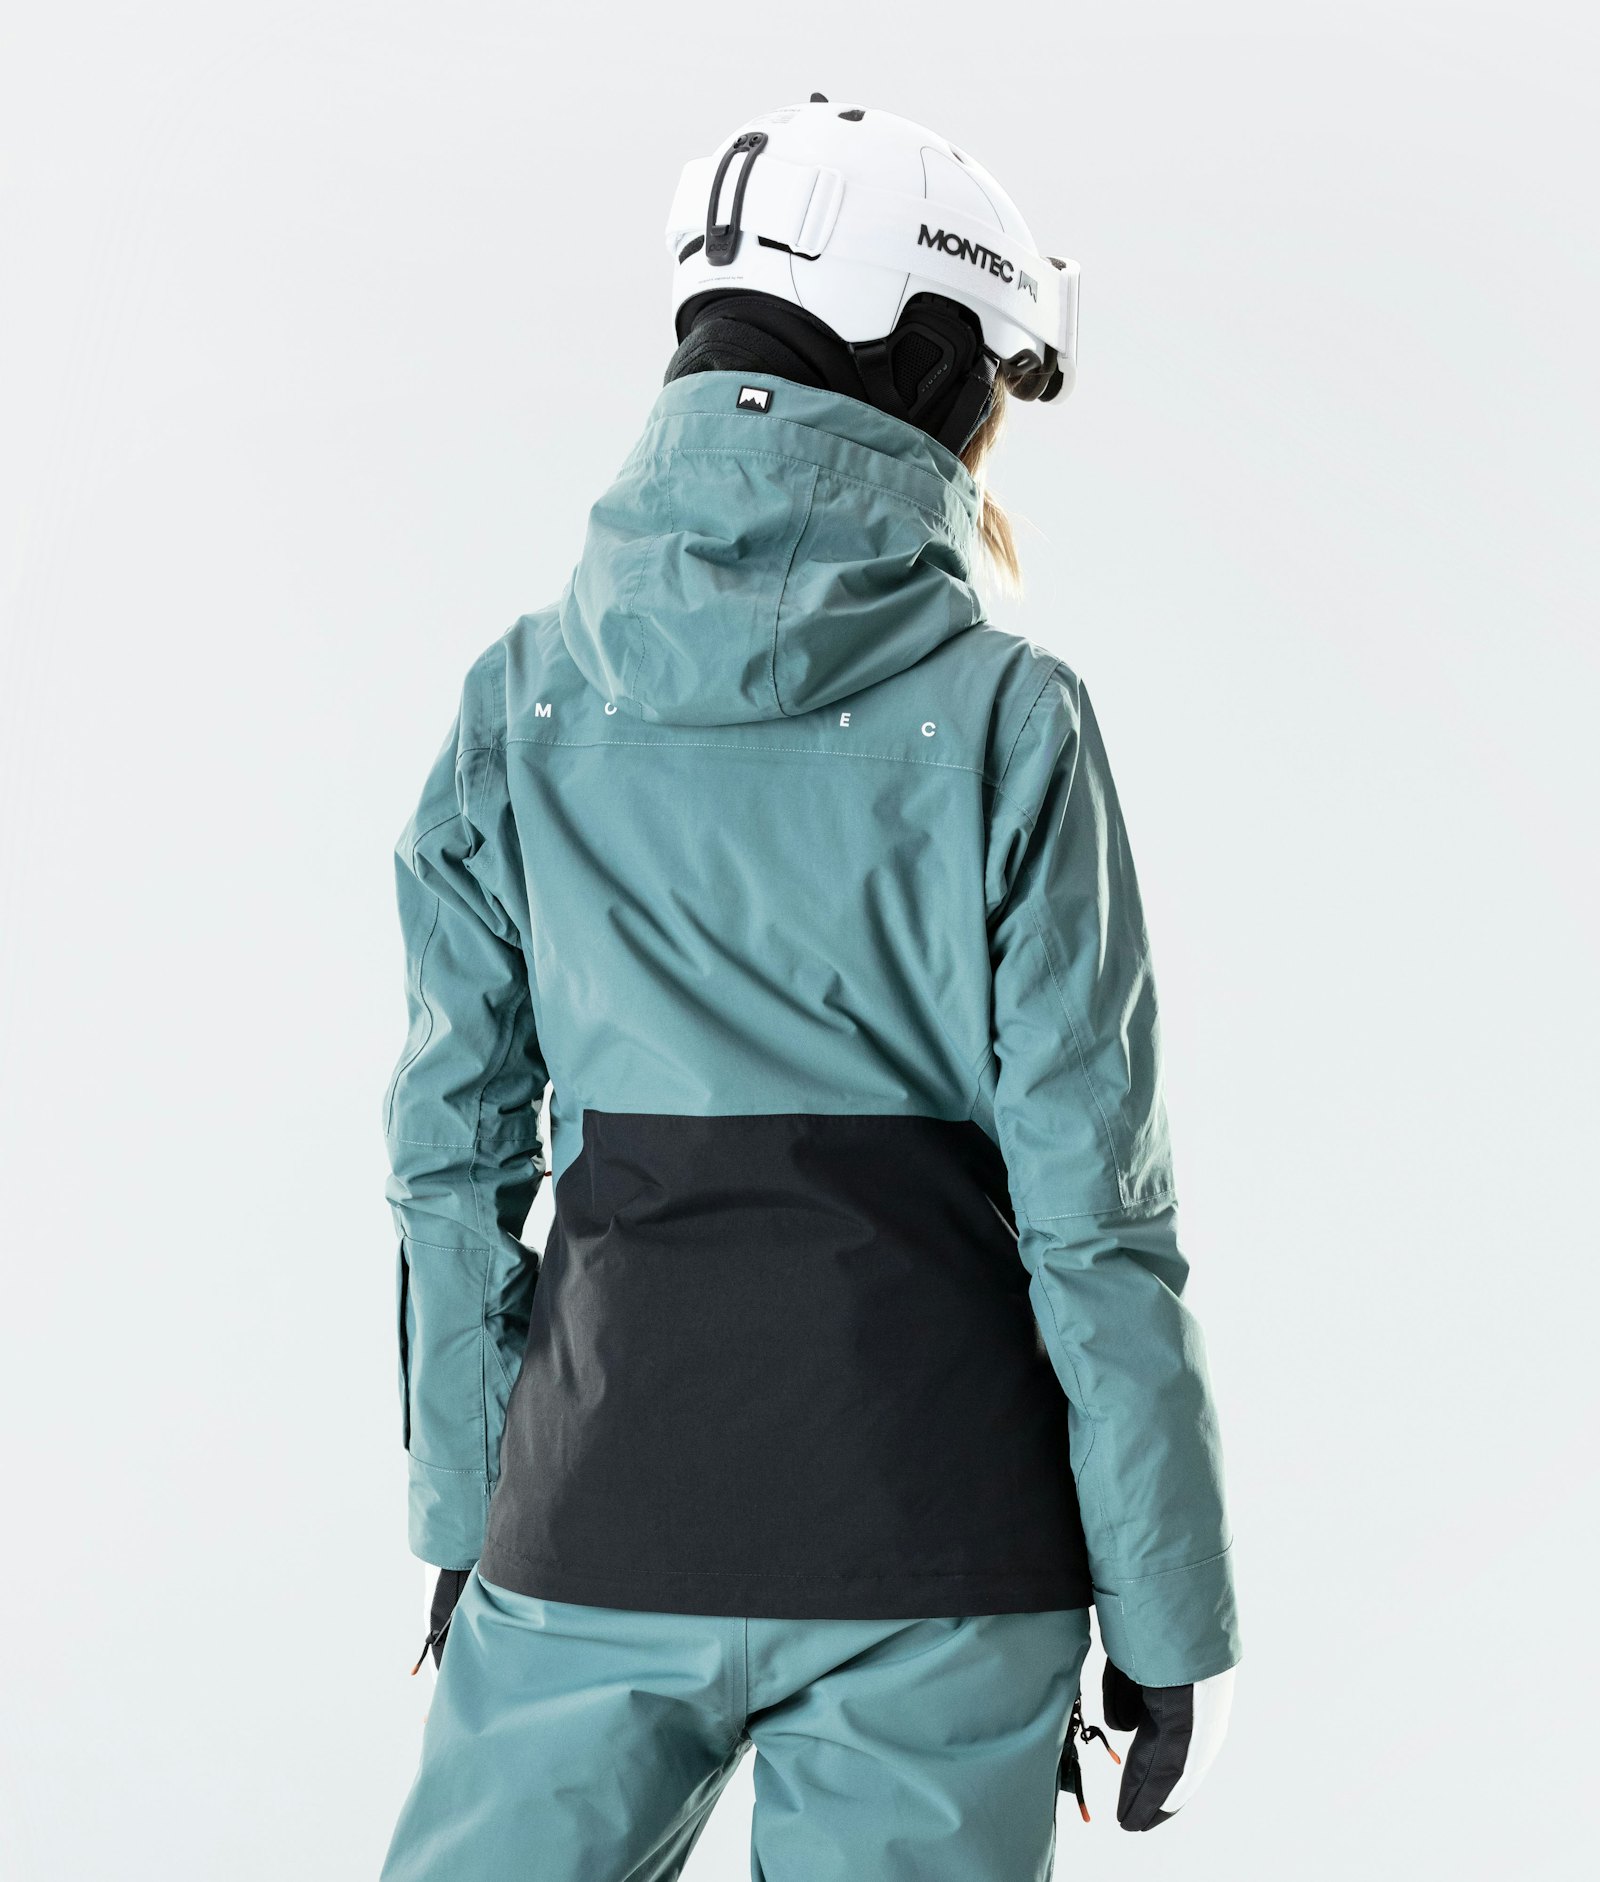 Moss W 2020 Snowboard Jacket Women Atlantic/Black Renewed, Image 5 of 9